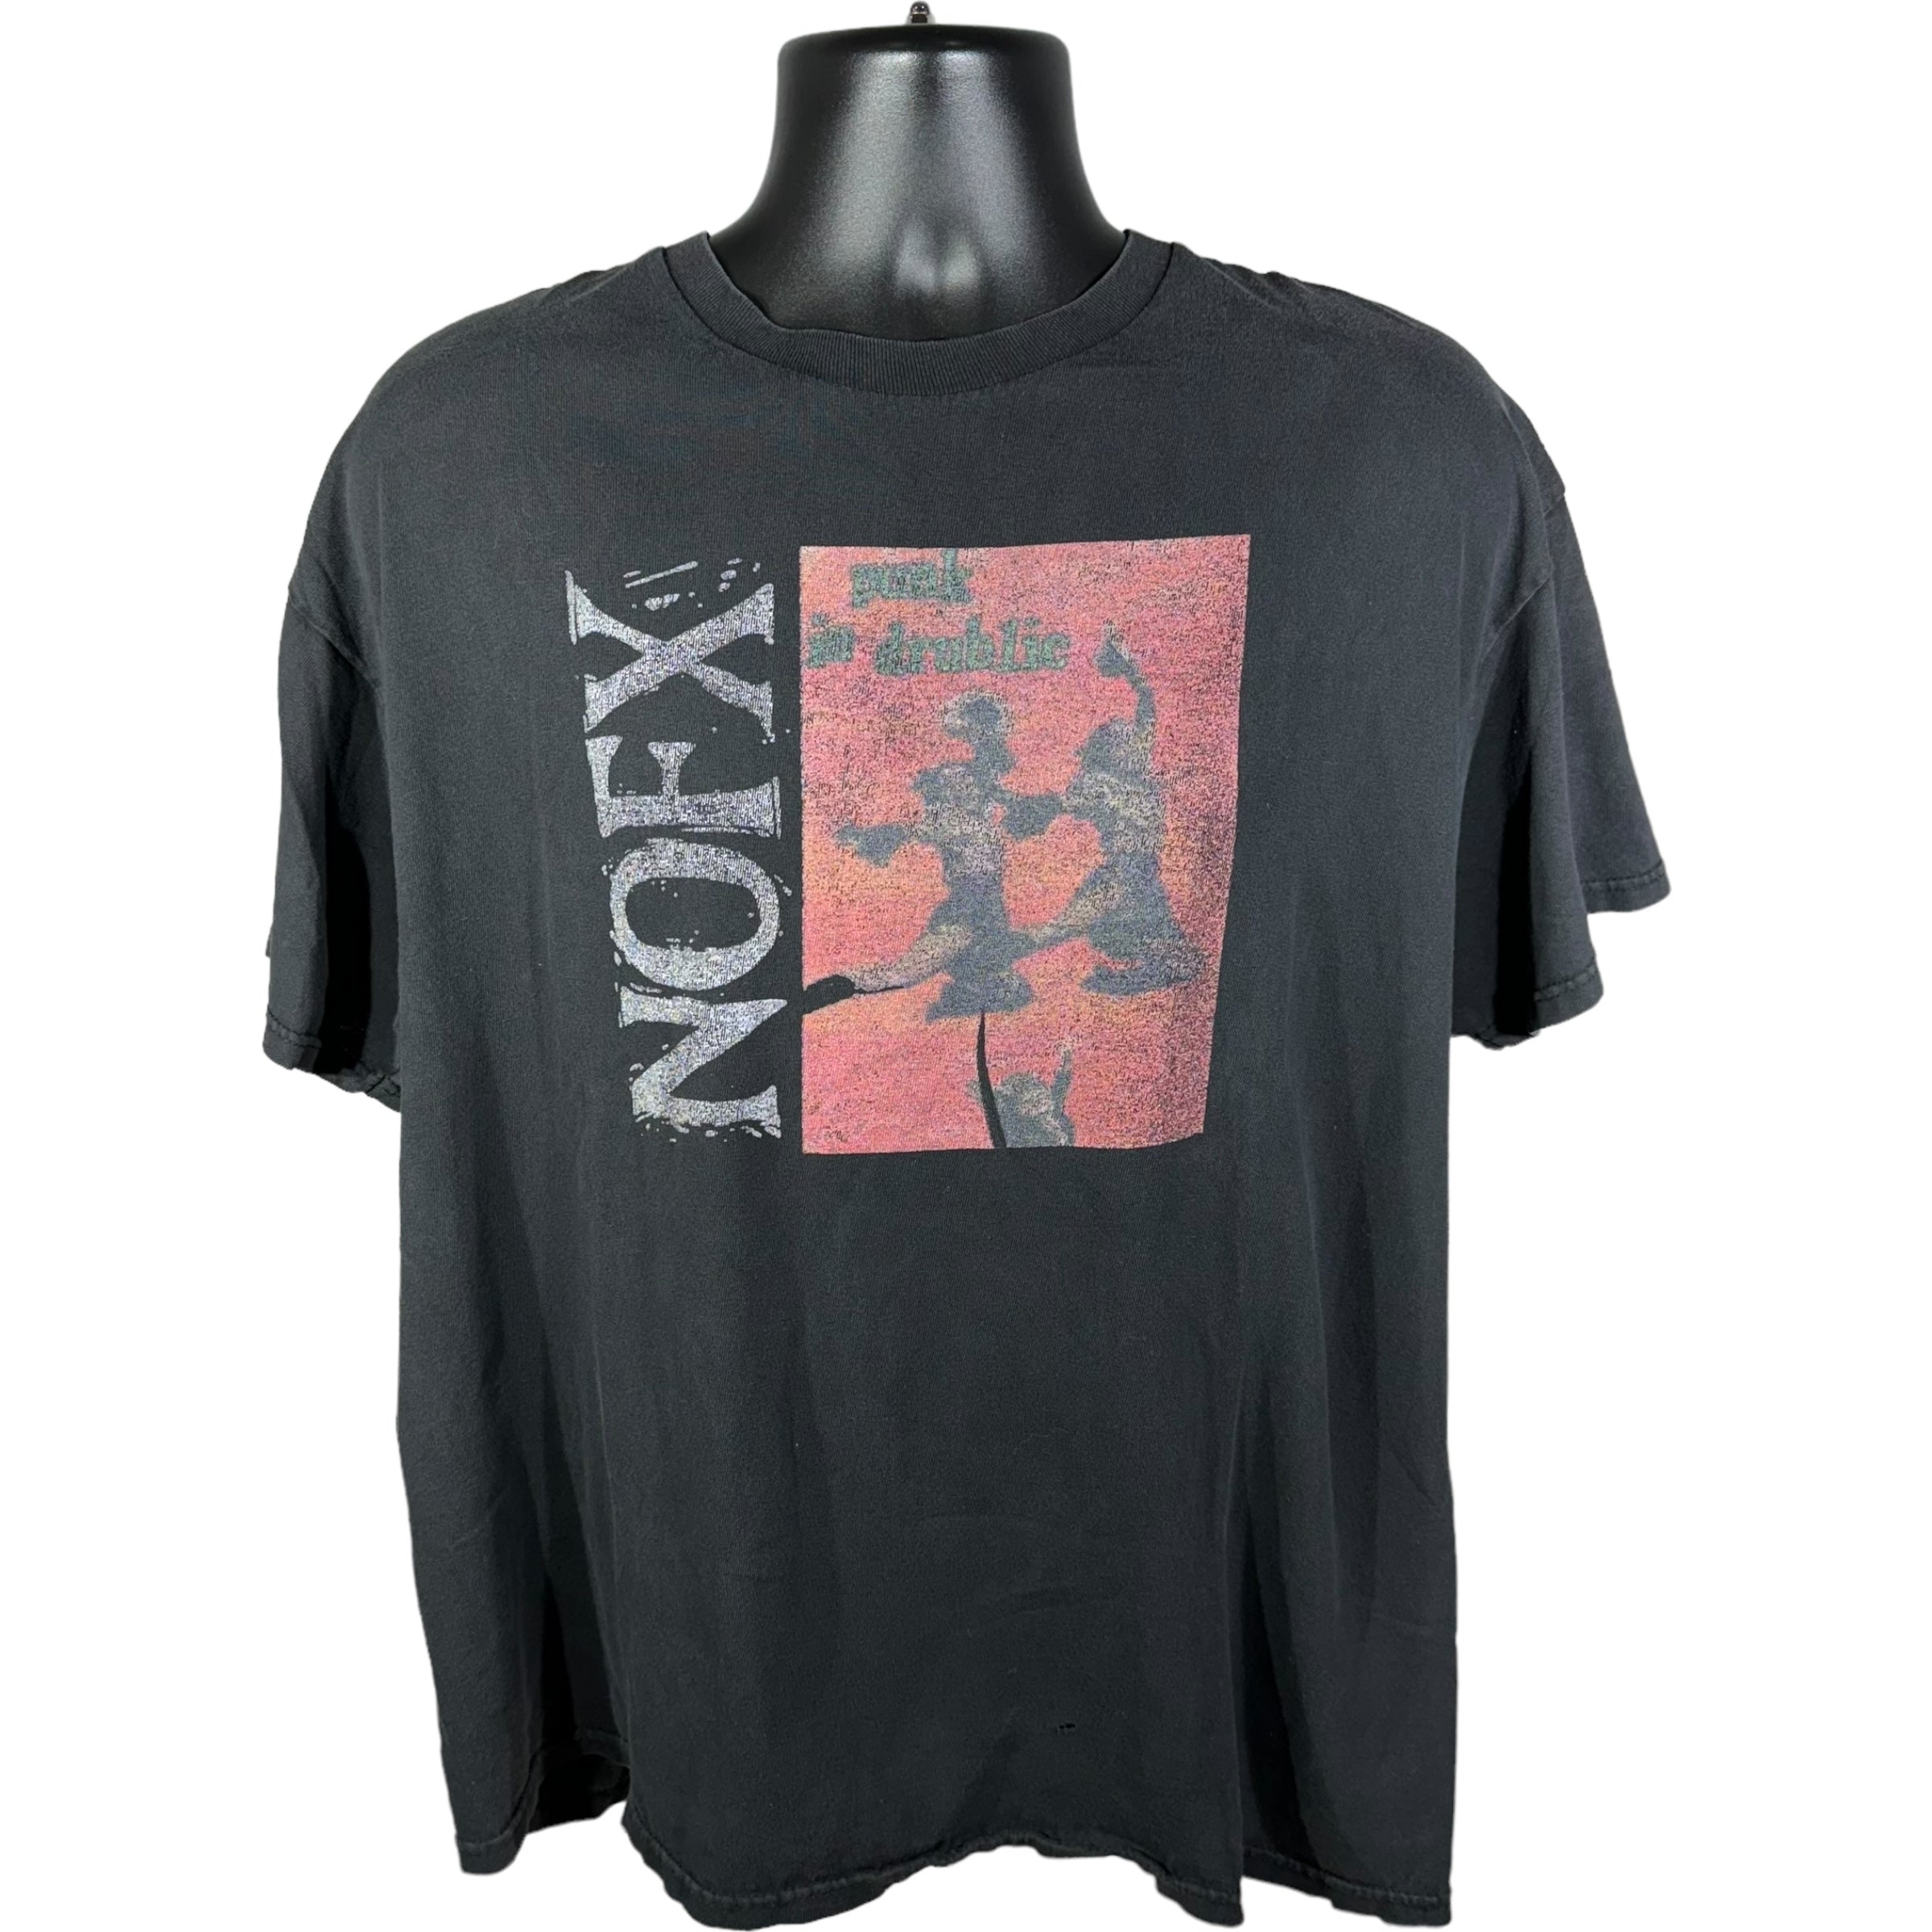 Vintage NOFX "Punk In Drublic" Tee